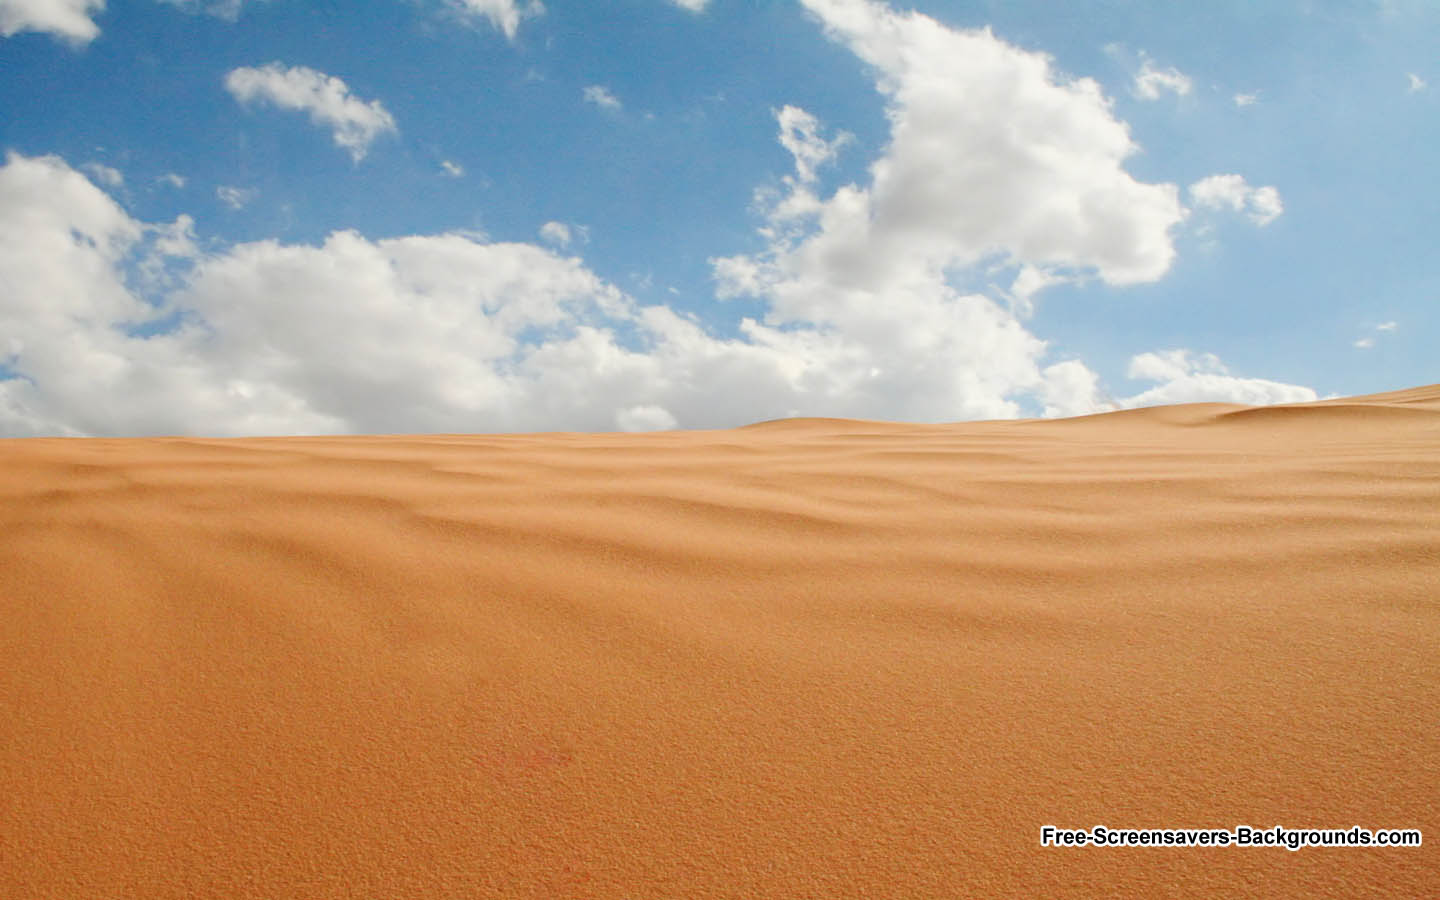 Desert Sand Hills Wallpaper   Free Screensavers and Backgrounds